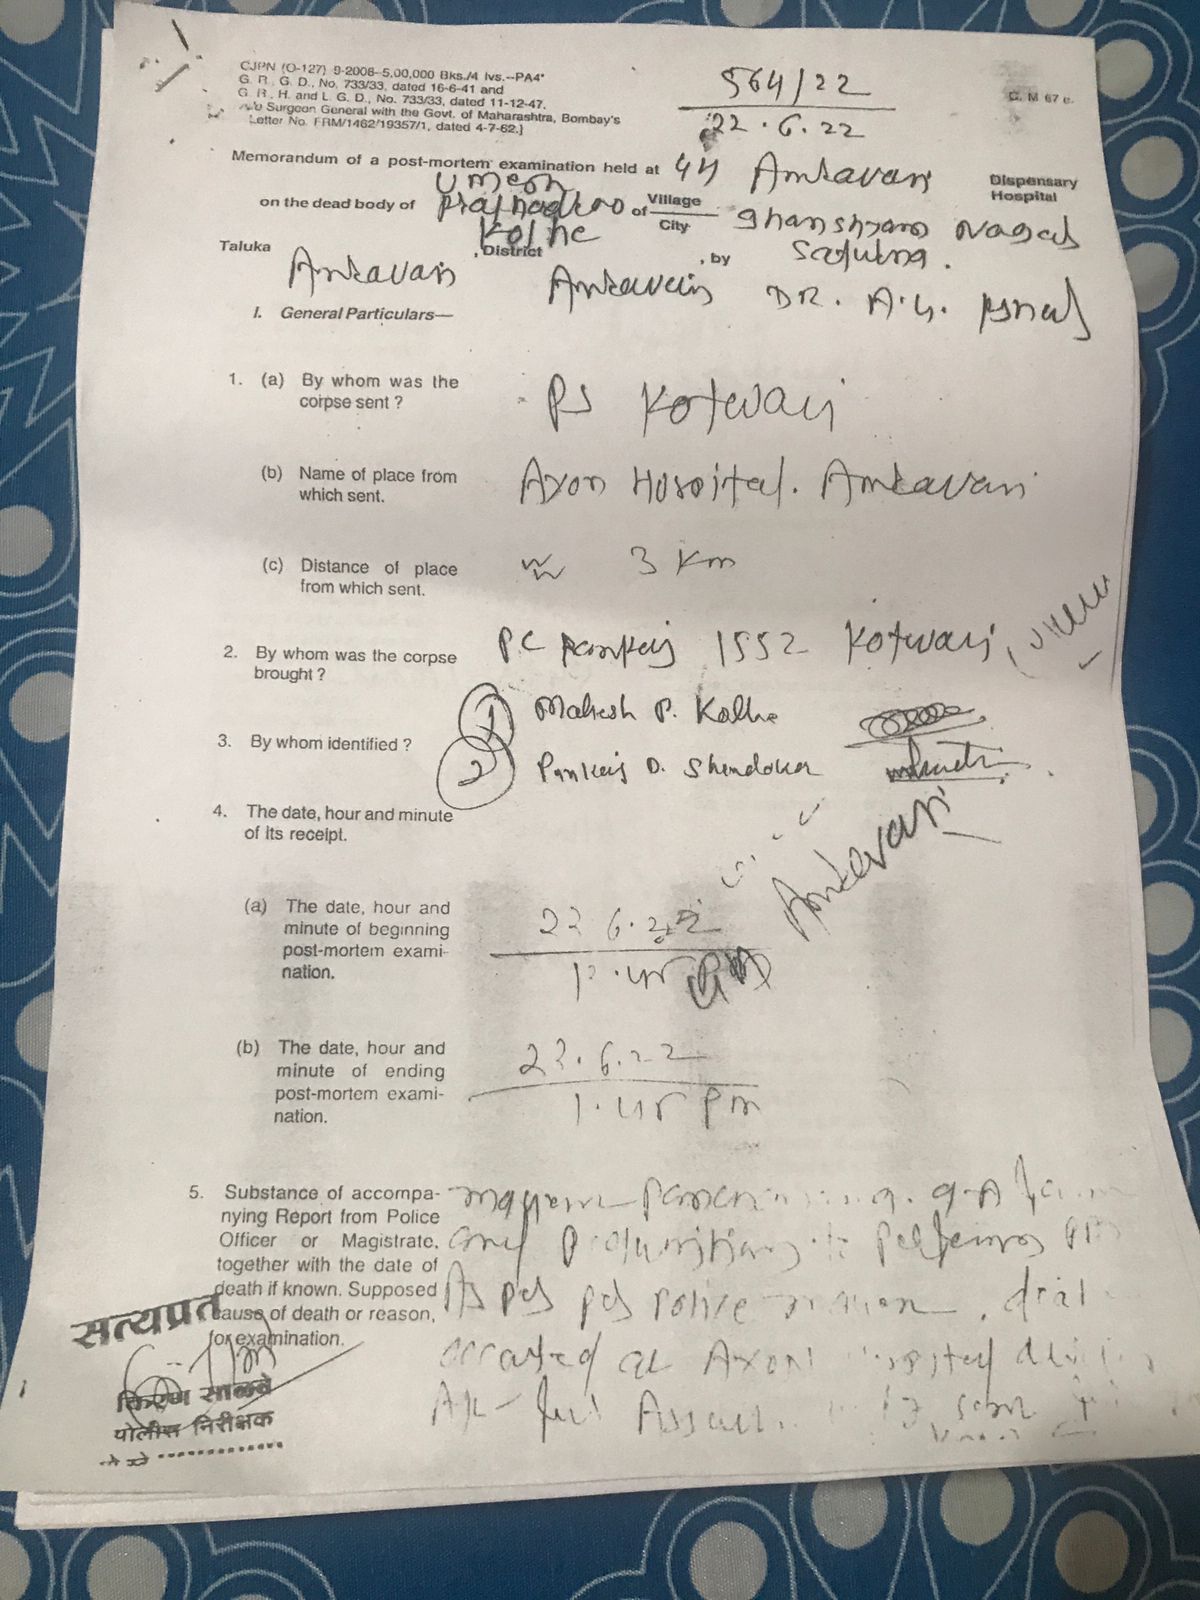 Autopsy report of Umesh Kolhe